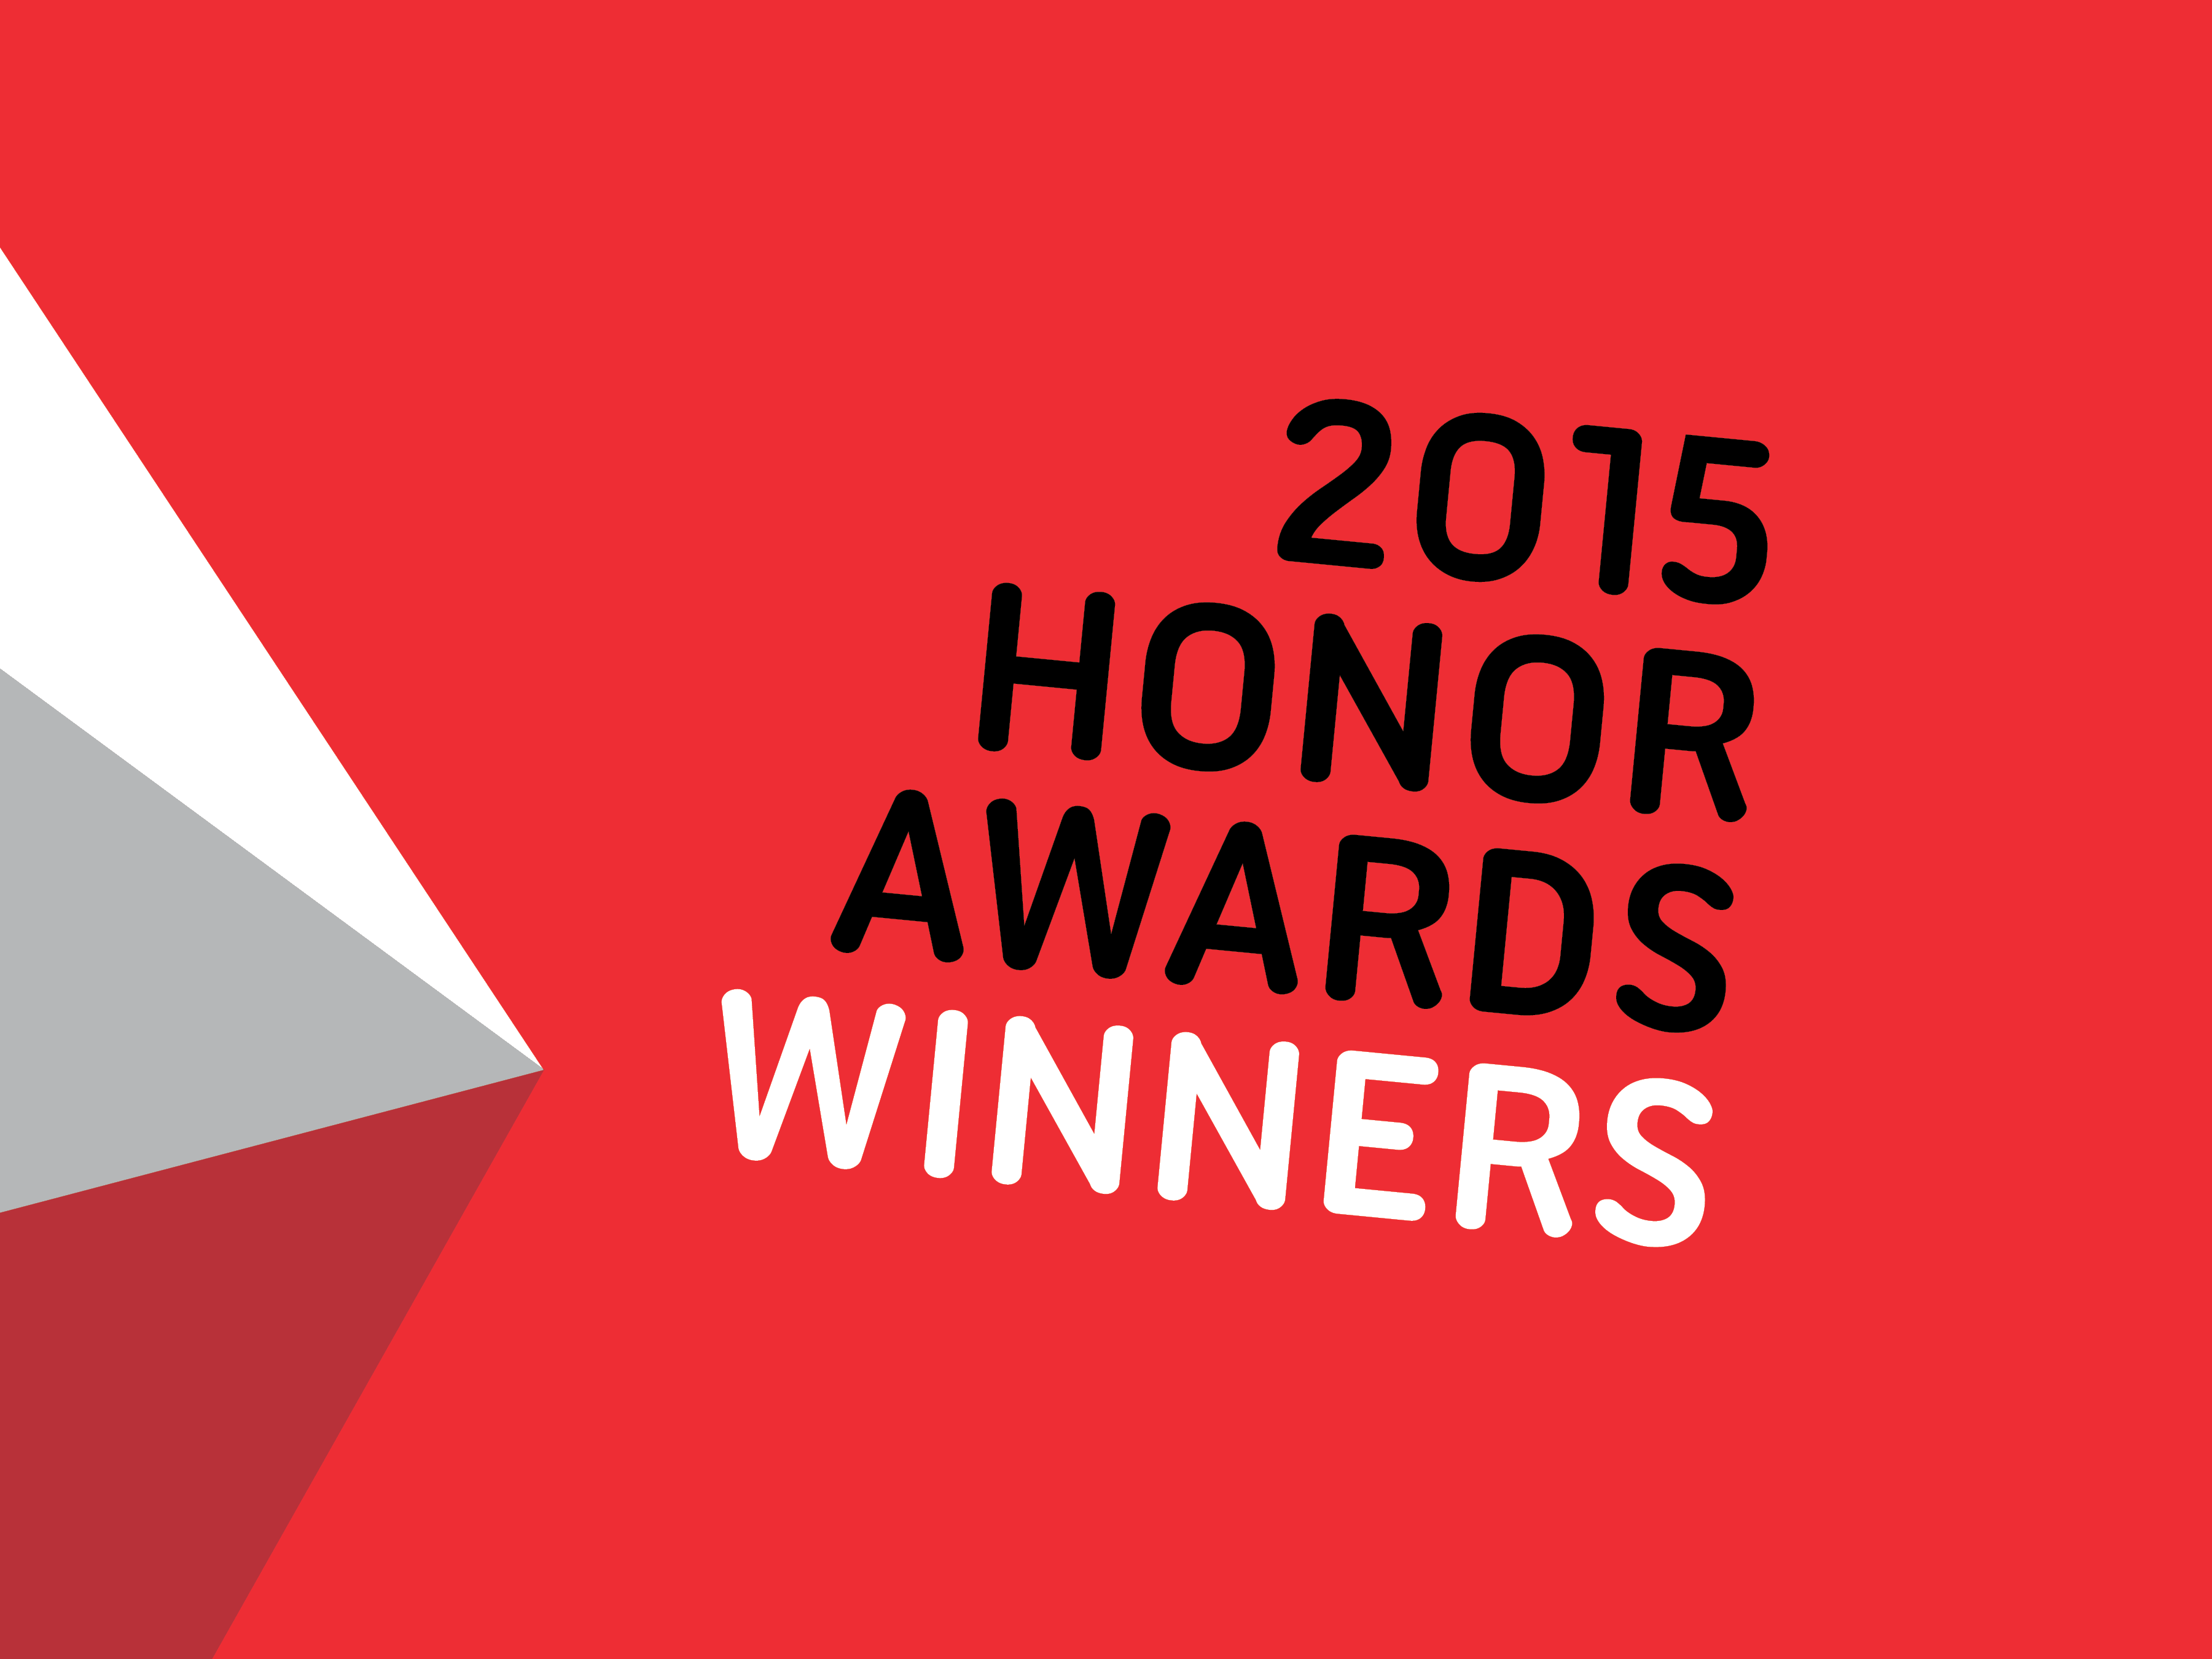 2015 Honor Awards Winners